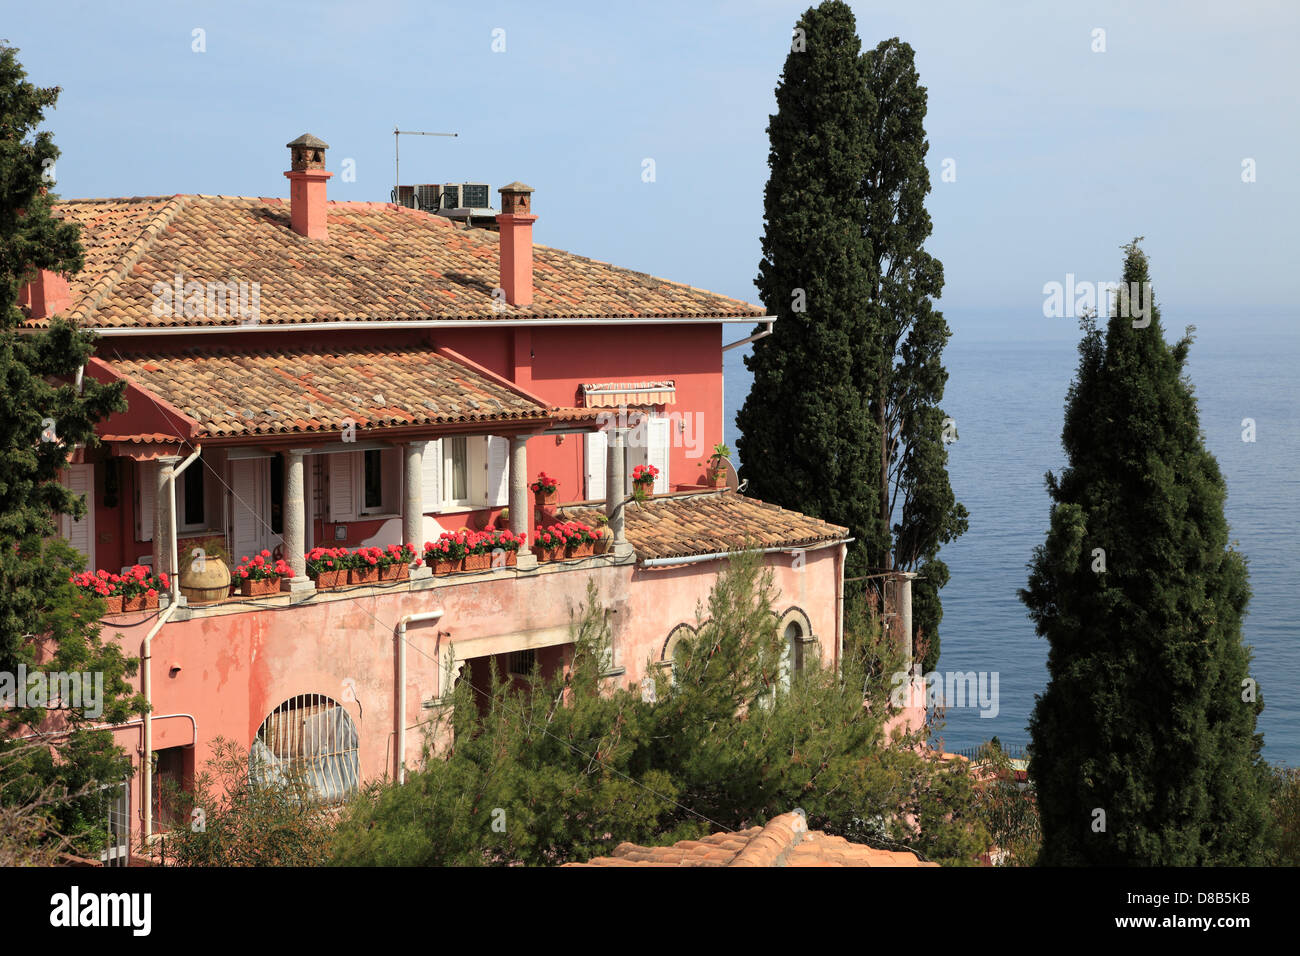 Italy, Sicily, Taormina, house overlooking the sea, Stock Photo